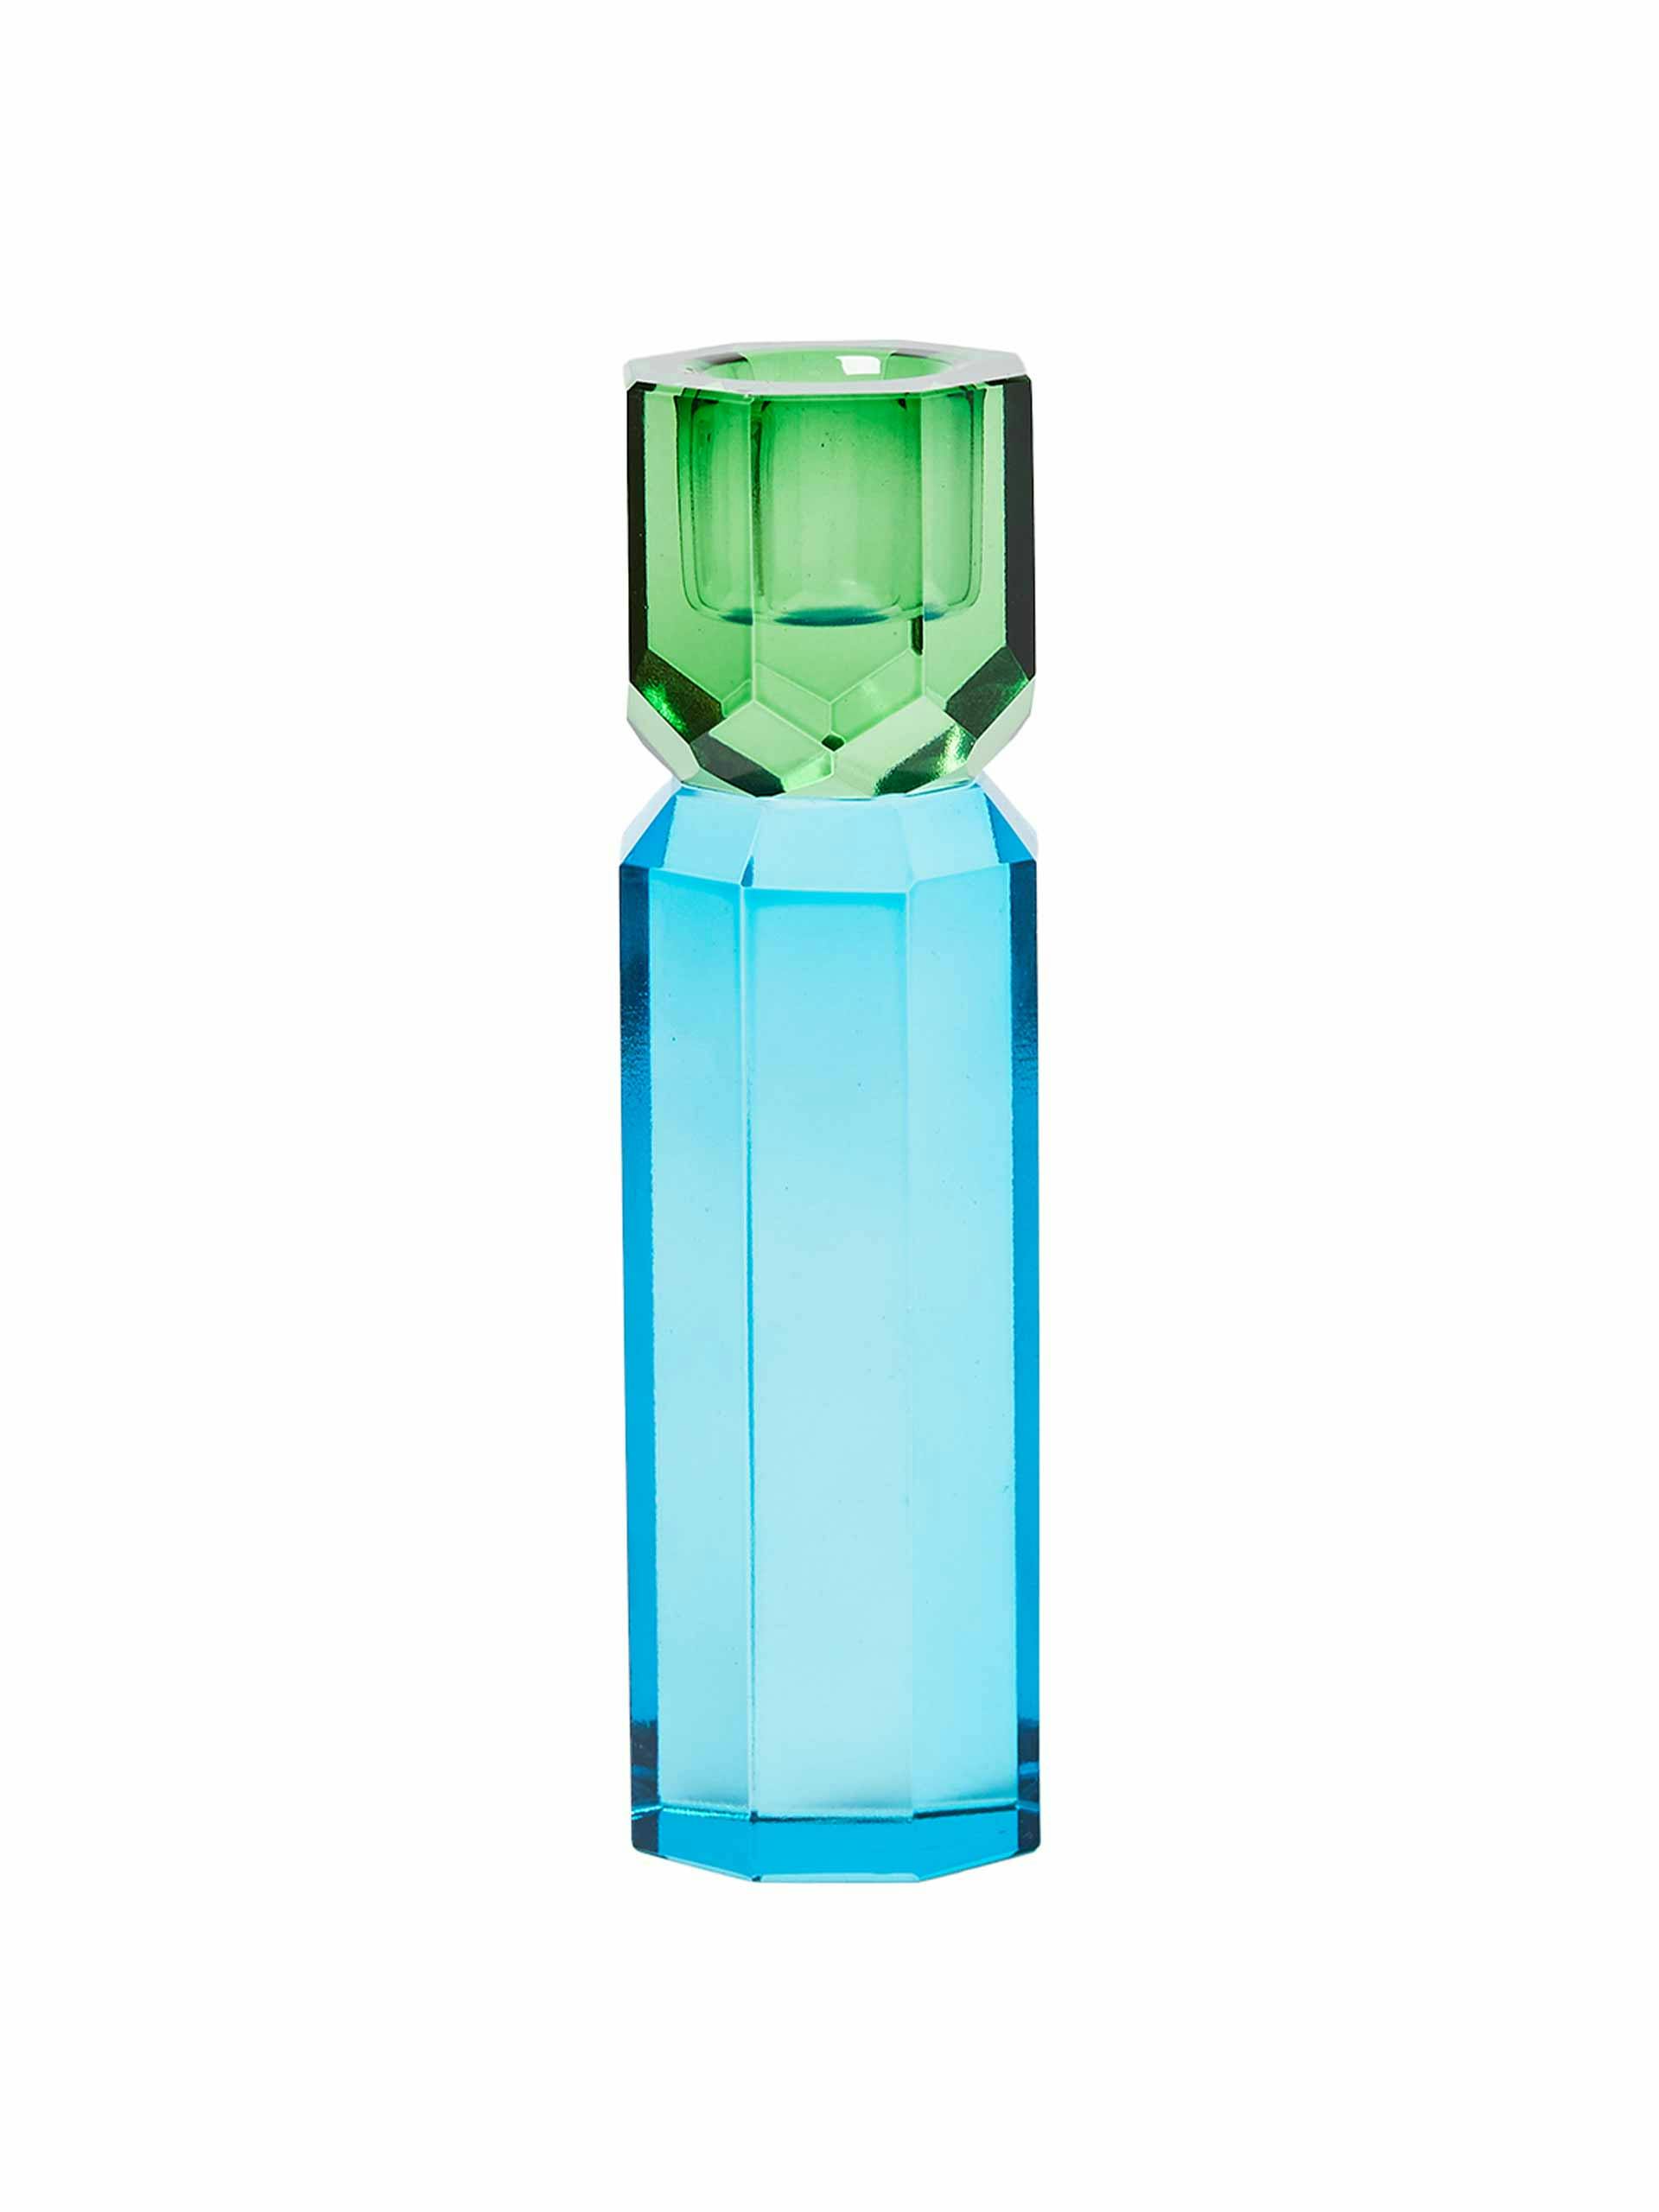 Faceted blue & green crystal candleholder